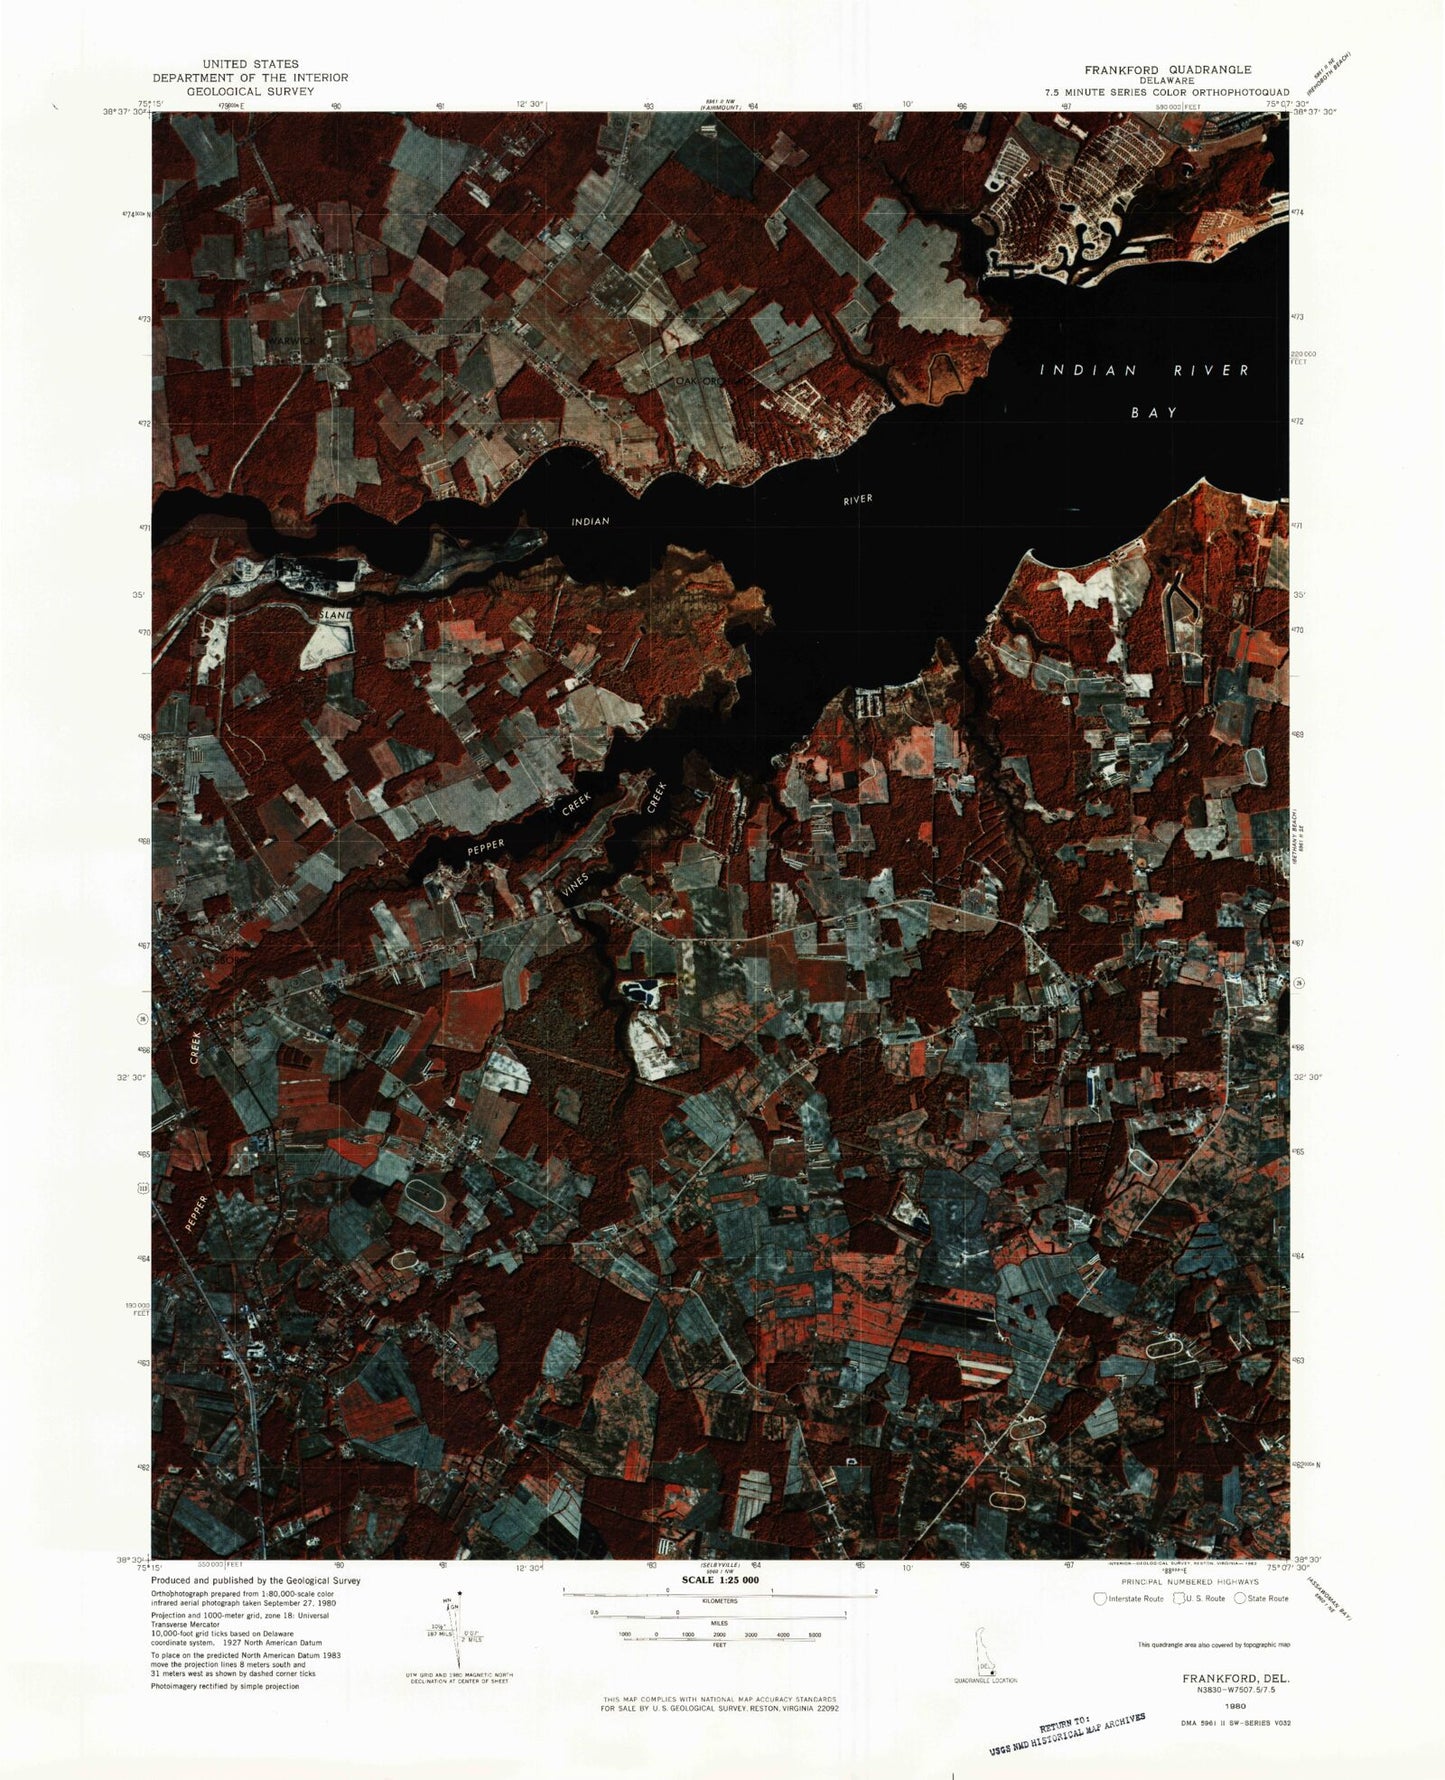 Classic USGS Frankford Delaware 7.5'x7.5' Topo Map Image